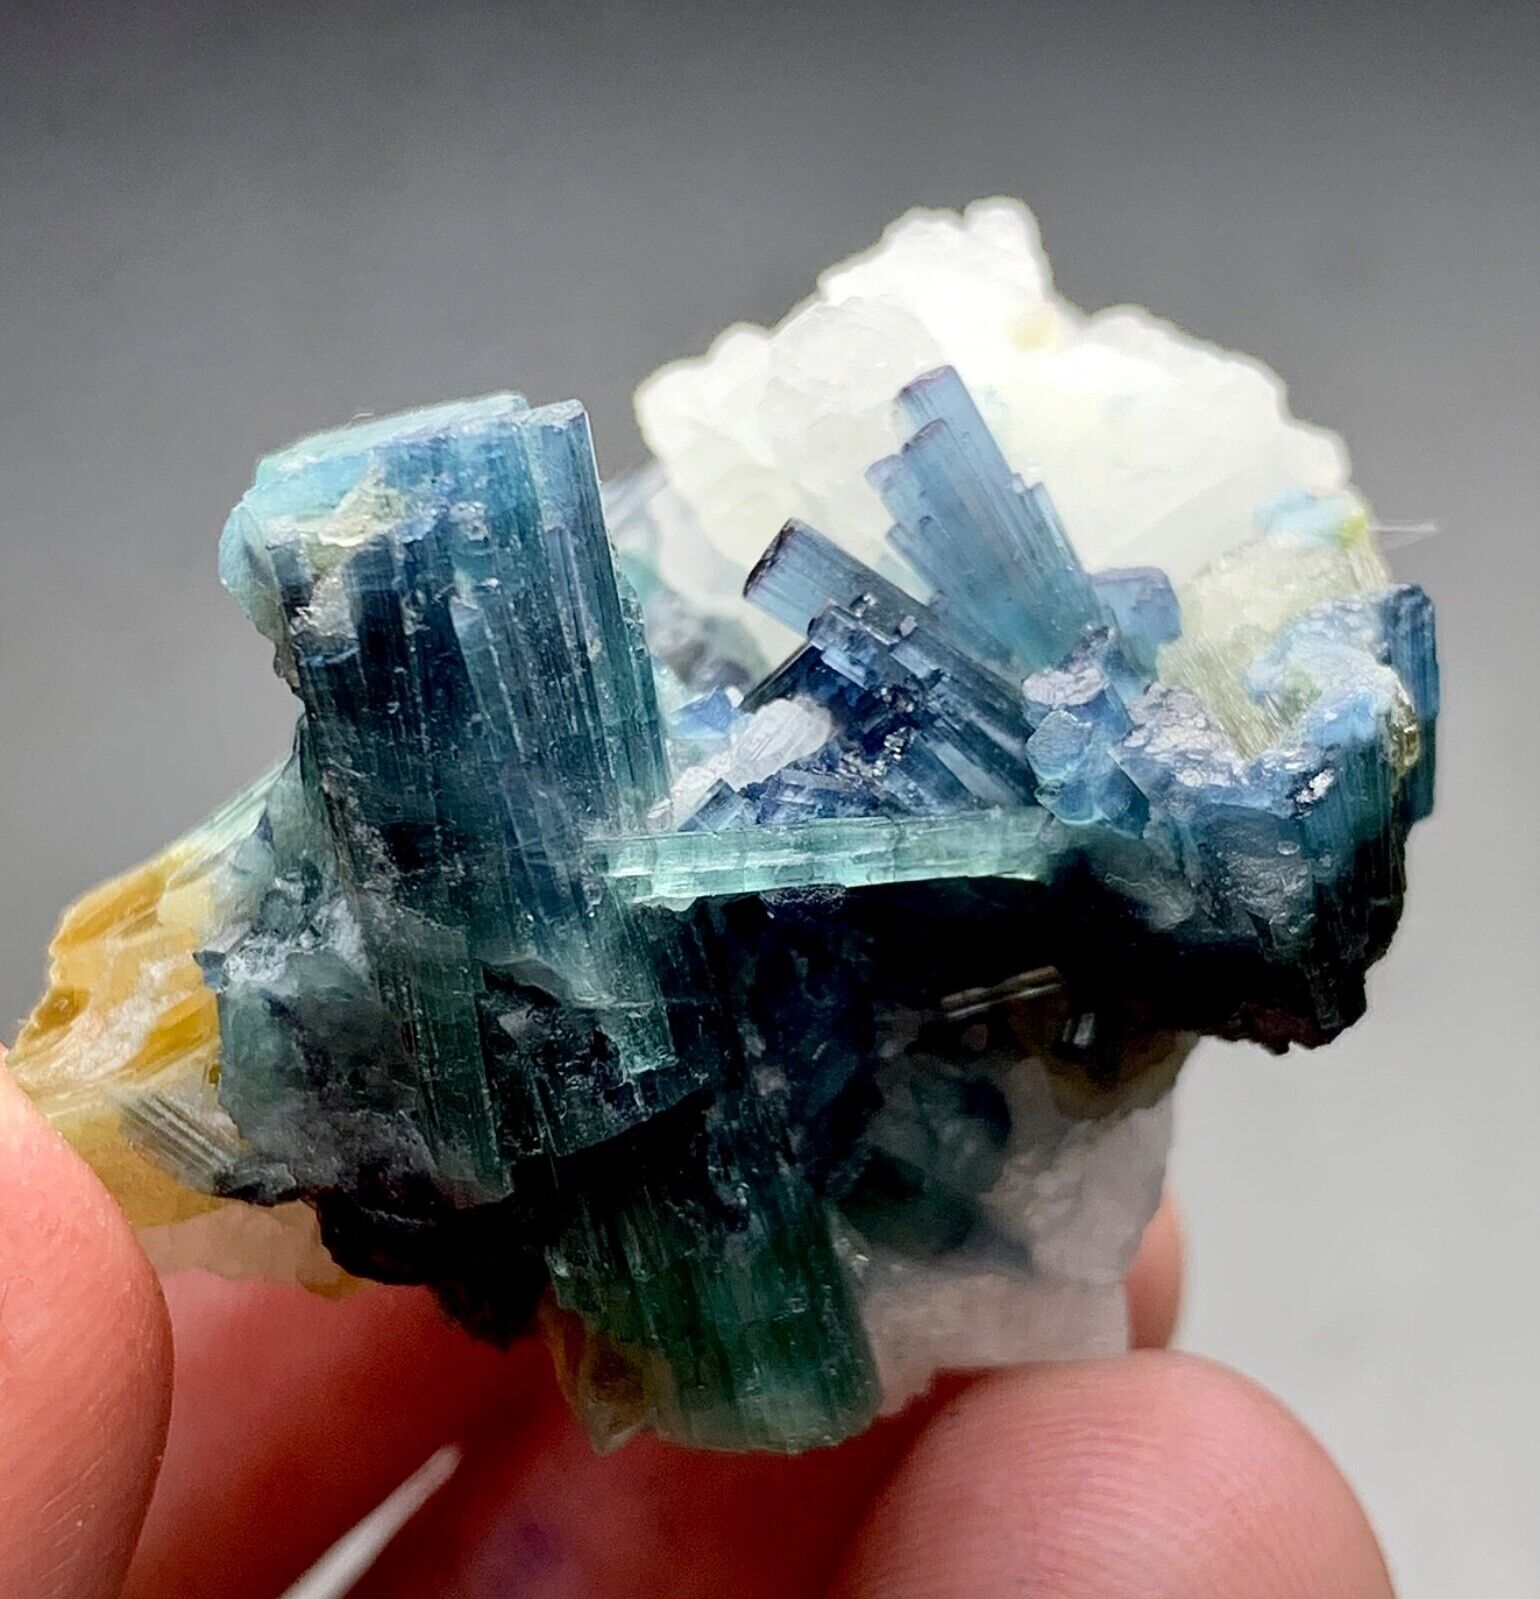 128 Carat Indicolite Tourmaline Crystal Specimen From Afghanistan